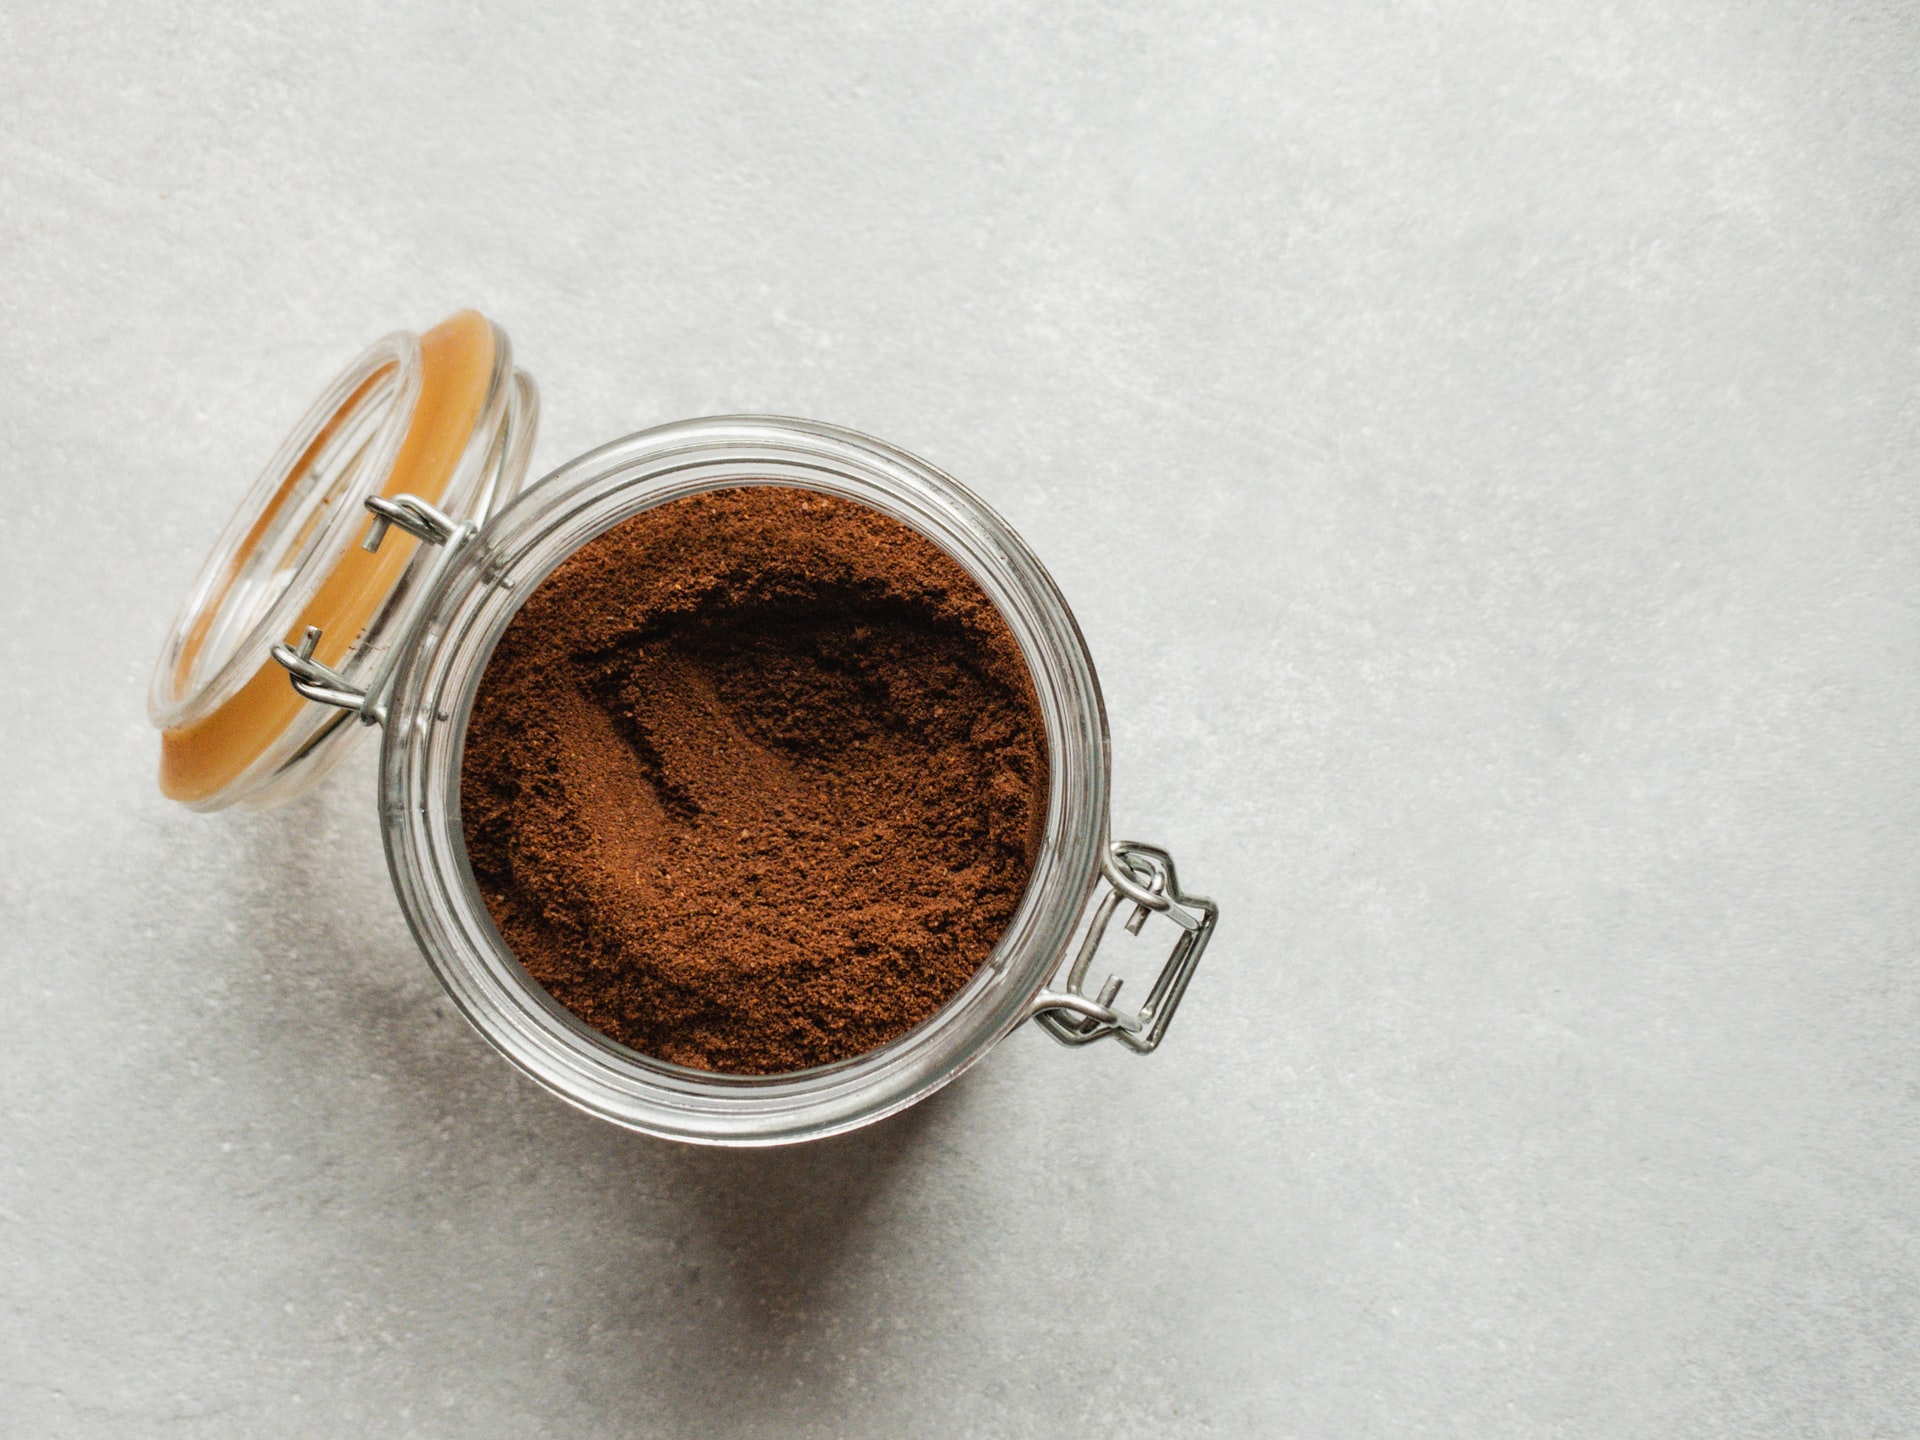 instant coffee powder for a caffeine boost